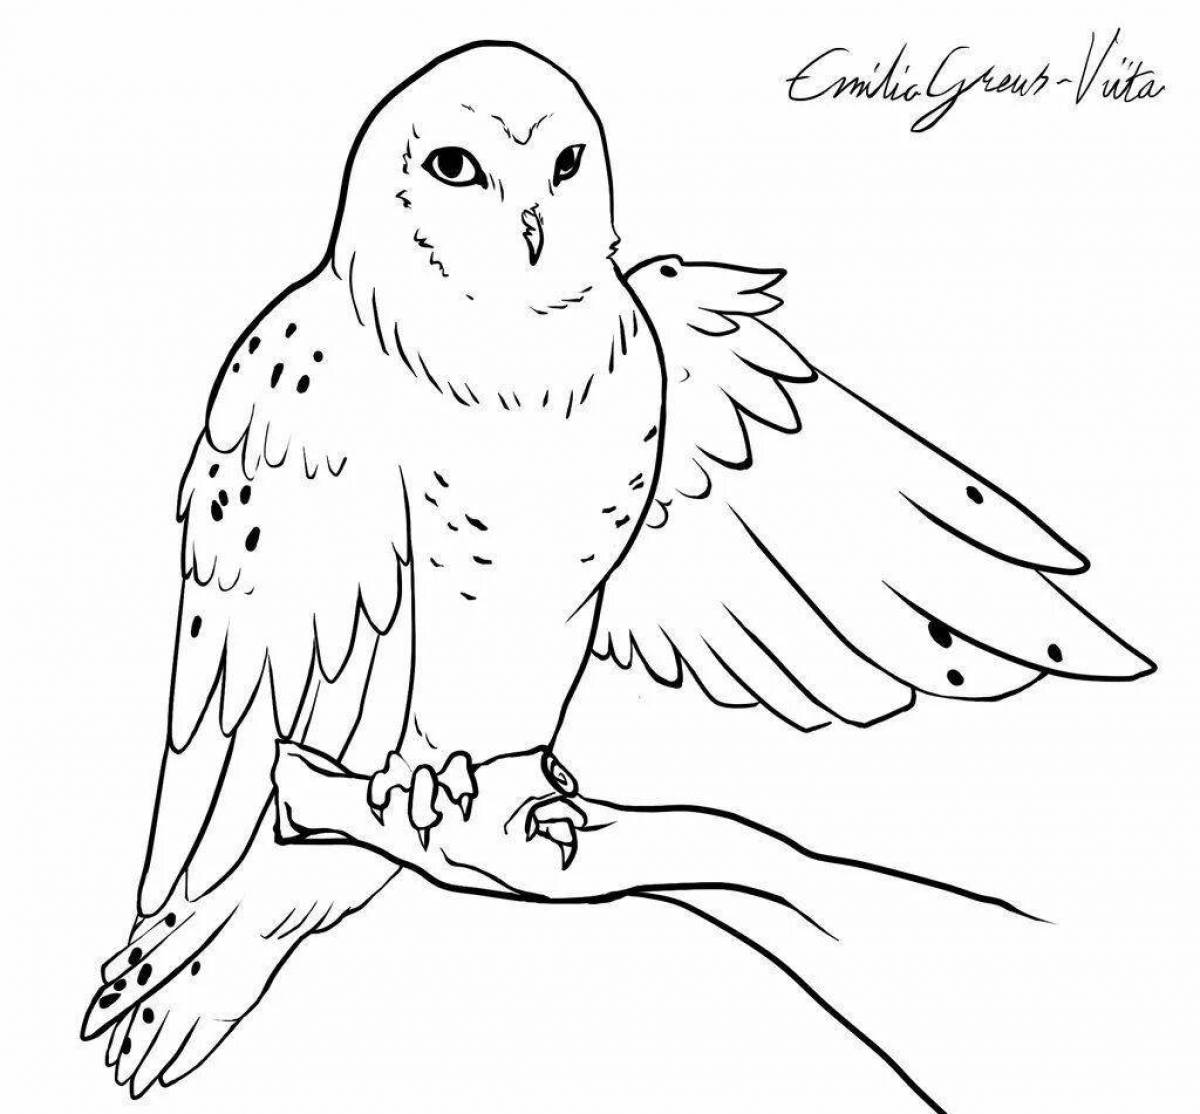 Exquisite white owl coloring book